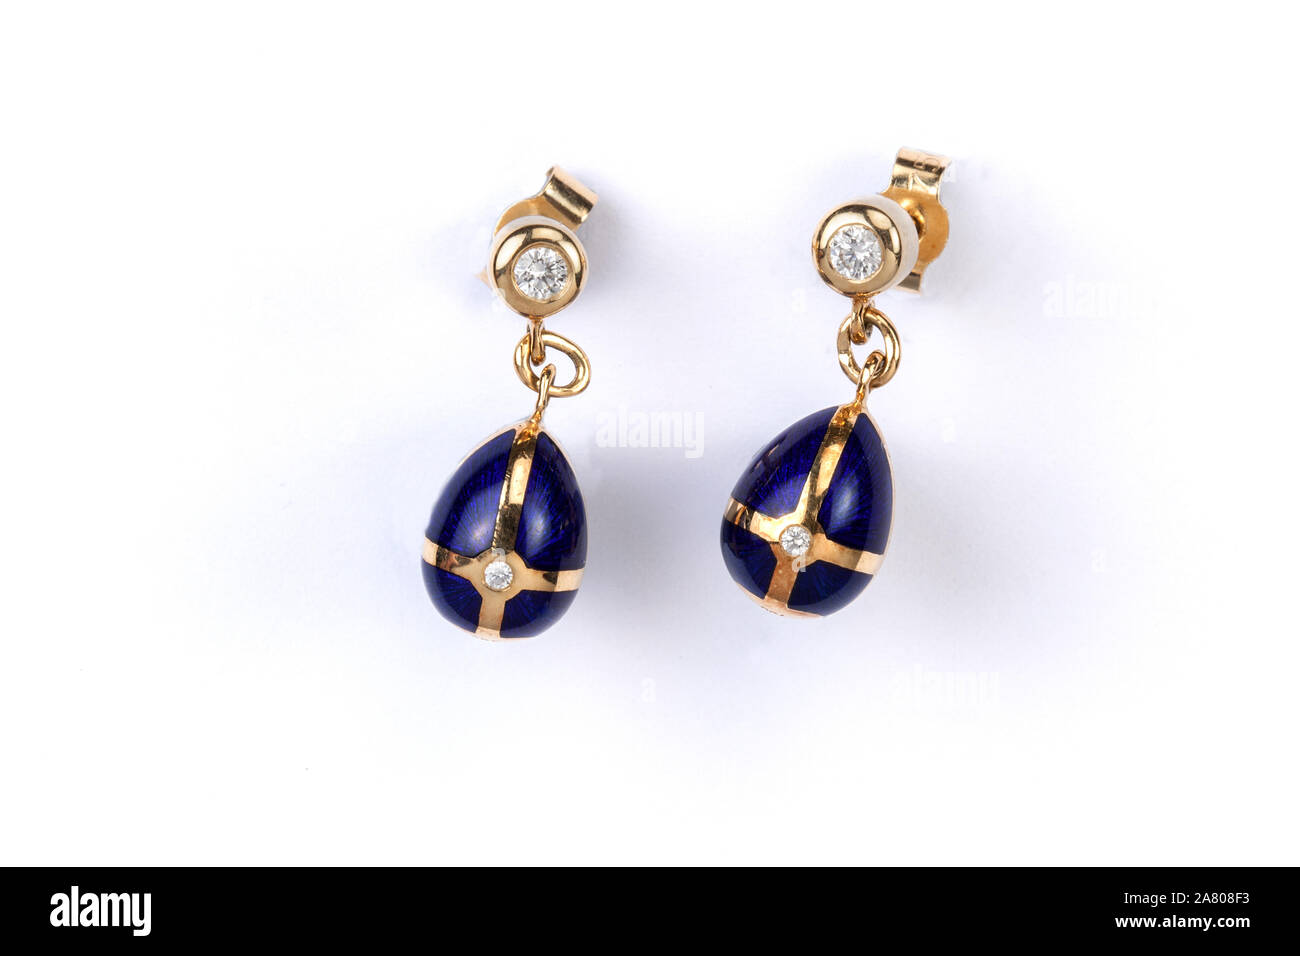 Fabergé gold,diamonds and enamel egg earrings. Stock Photo